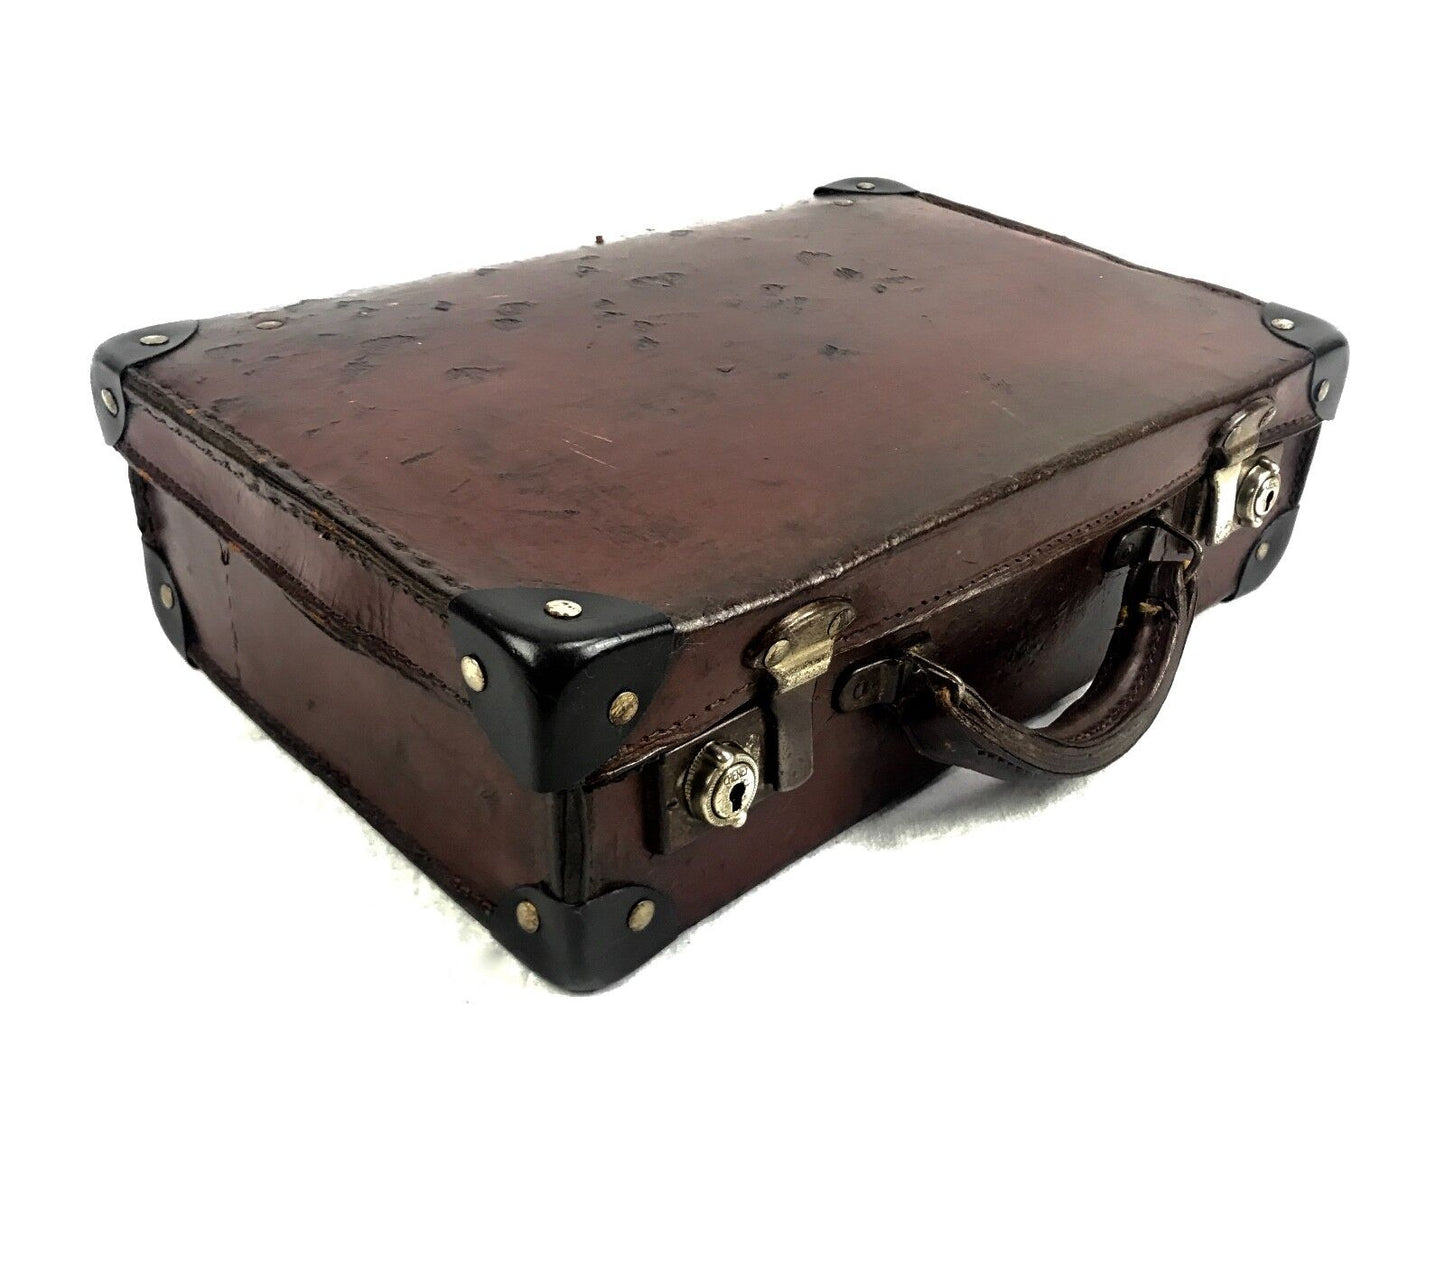 Vintage Clothing - Pakawa Leather Suitcase Trunk / Travel Bag / Harrods London